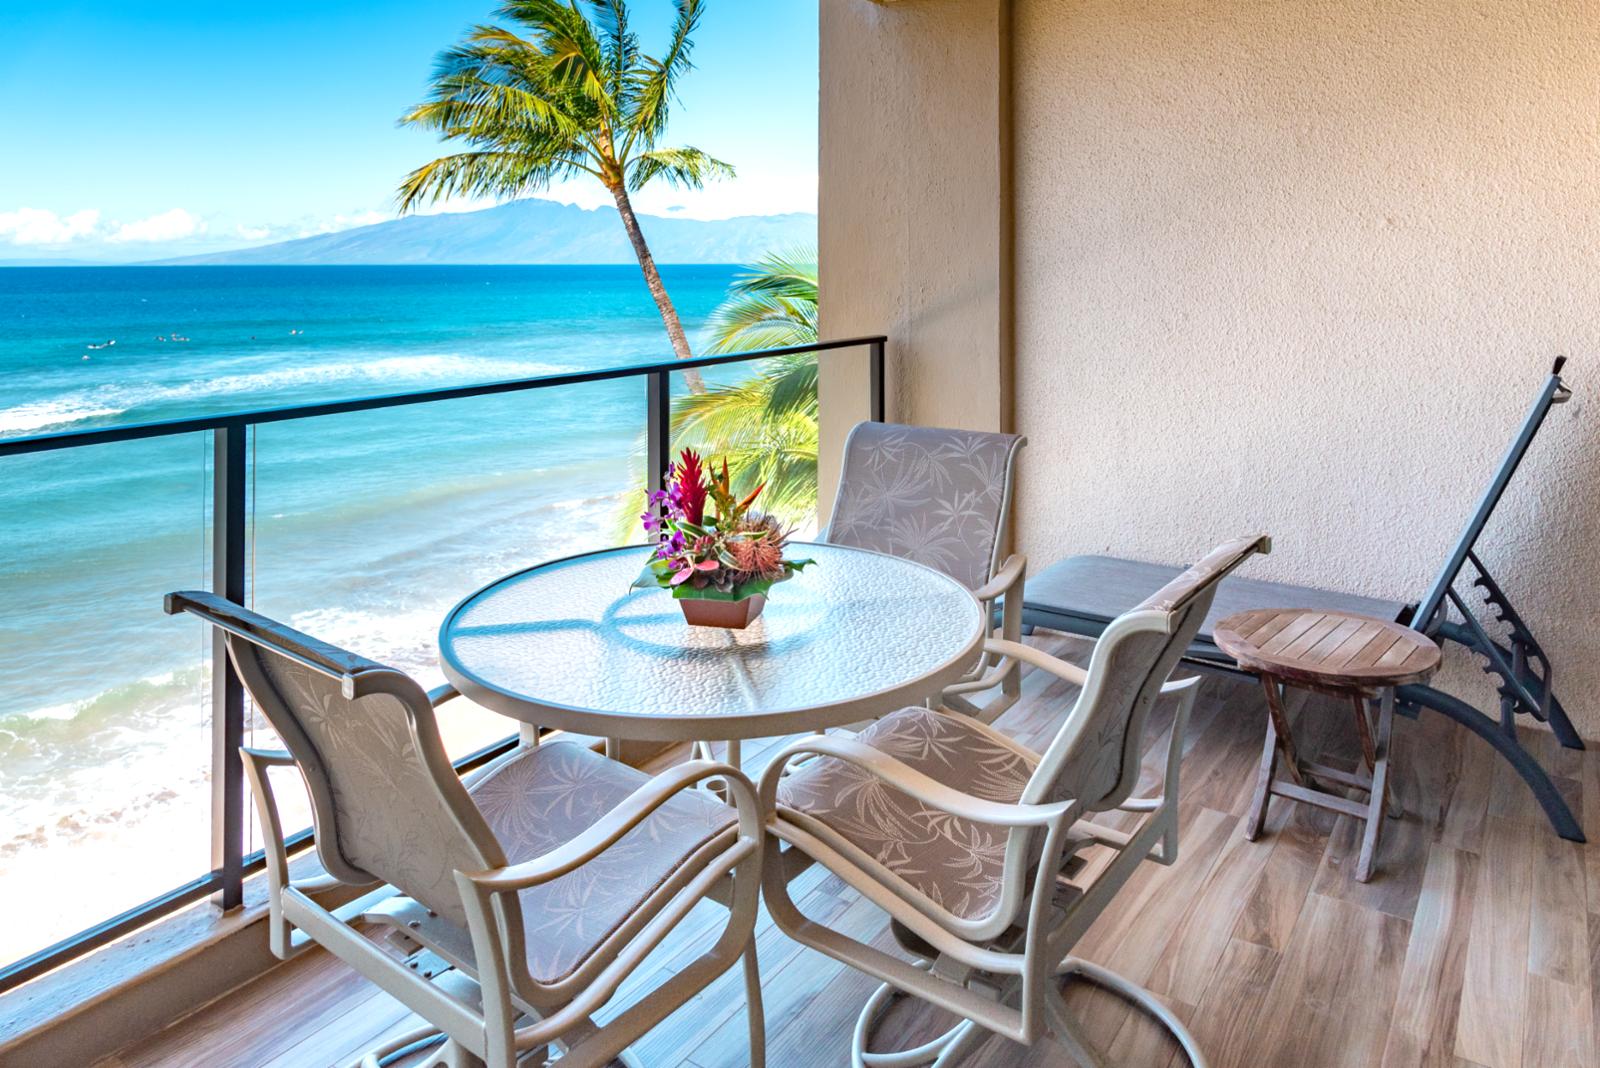 Upgraded flooring and alluring aqua marine views, this is Maui!